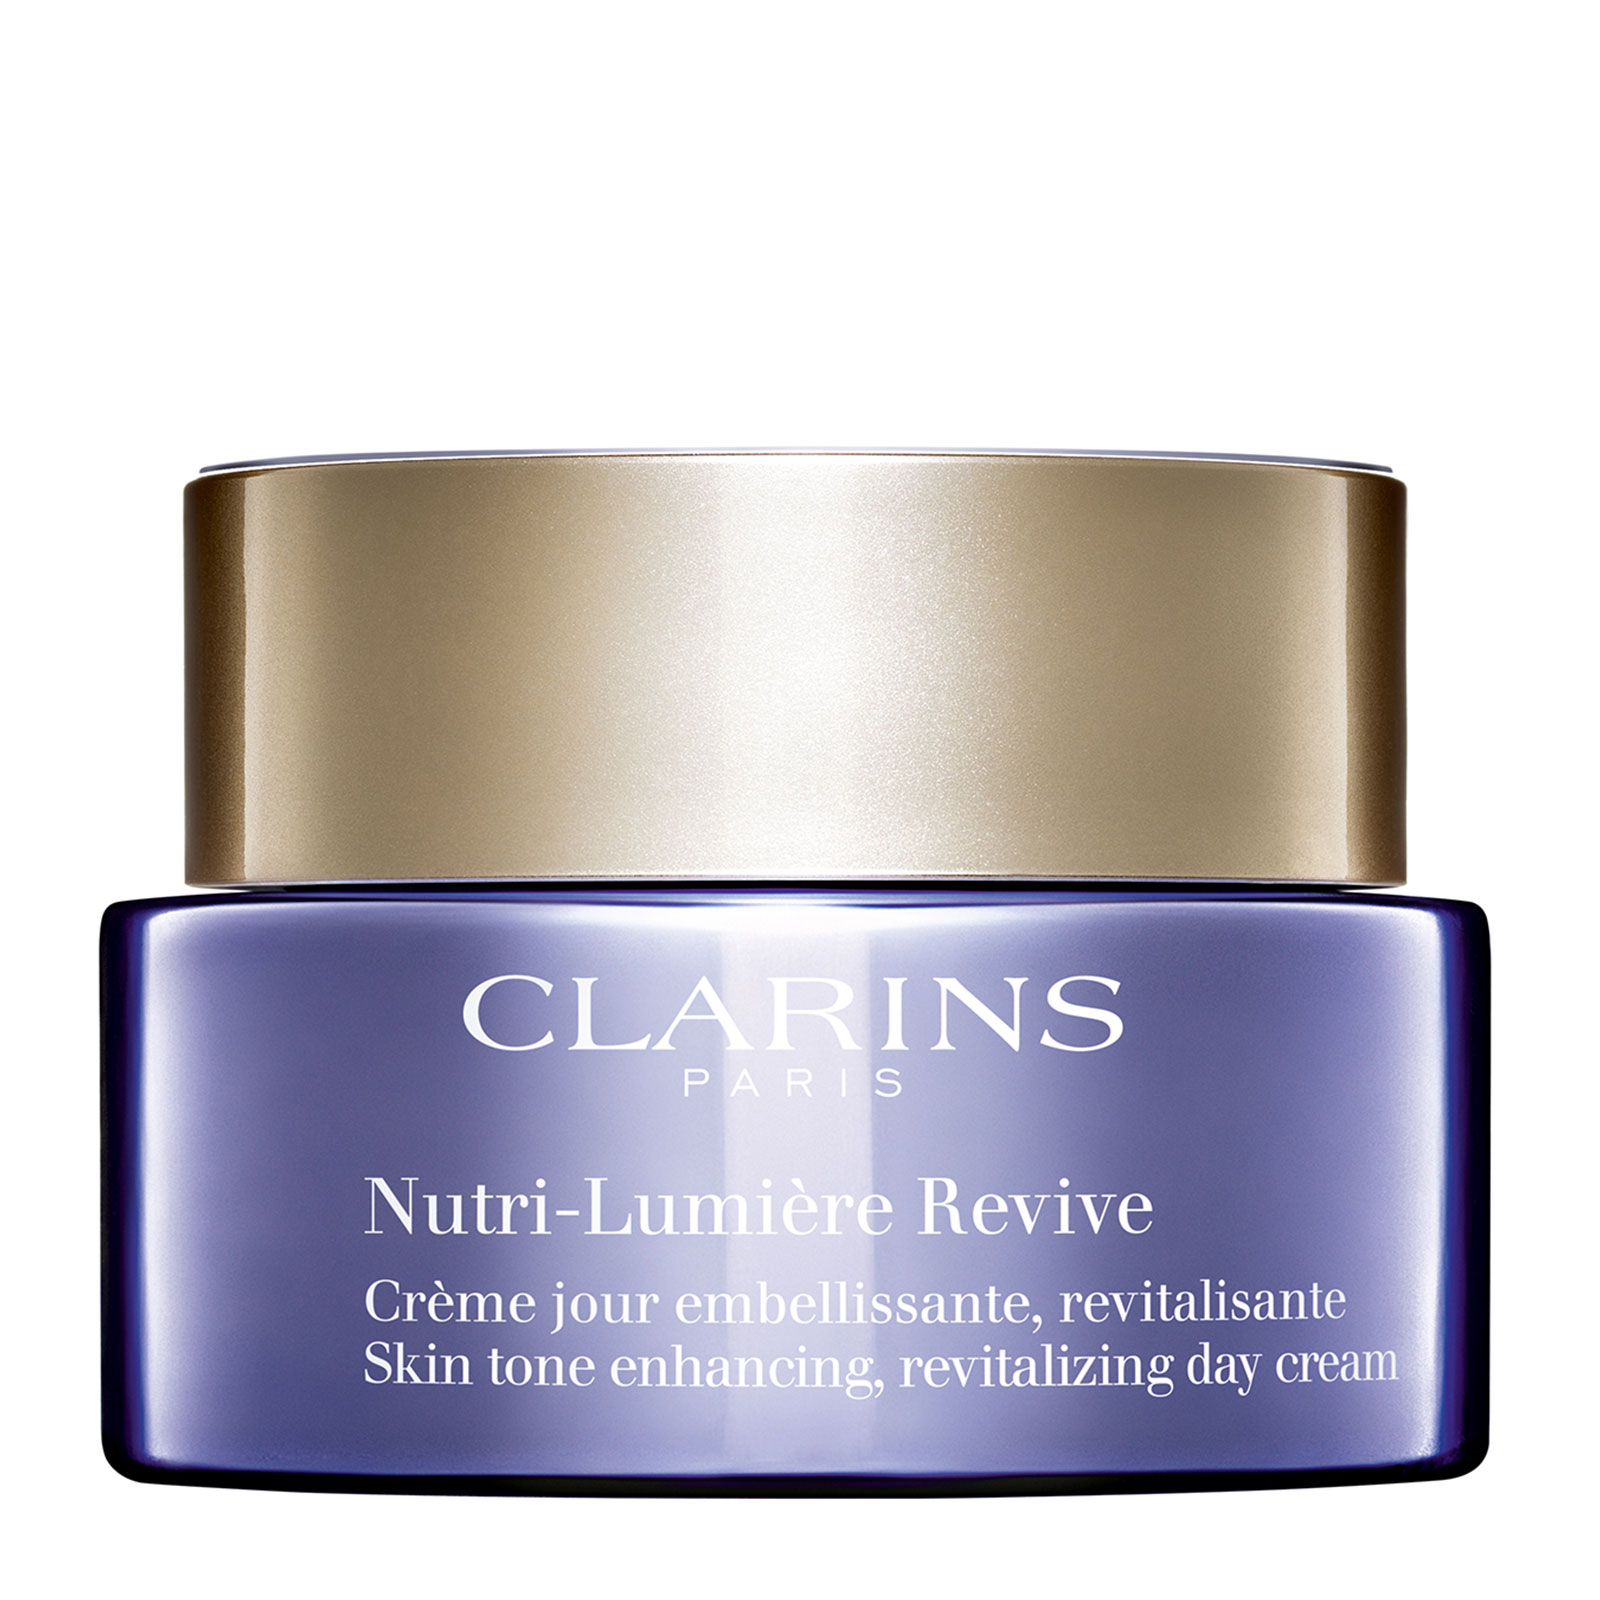 Clarins Nutri-Lumi�re Revive�Day Cream�50ml